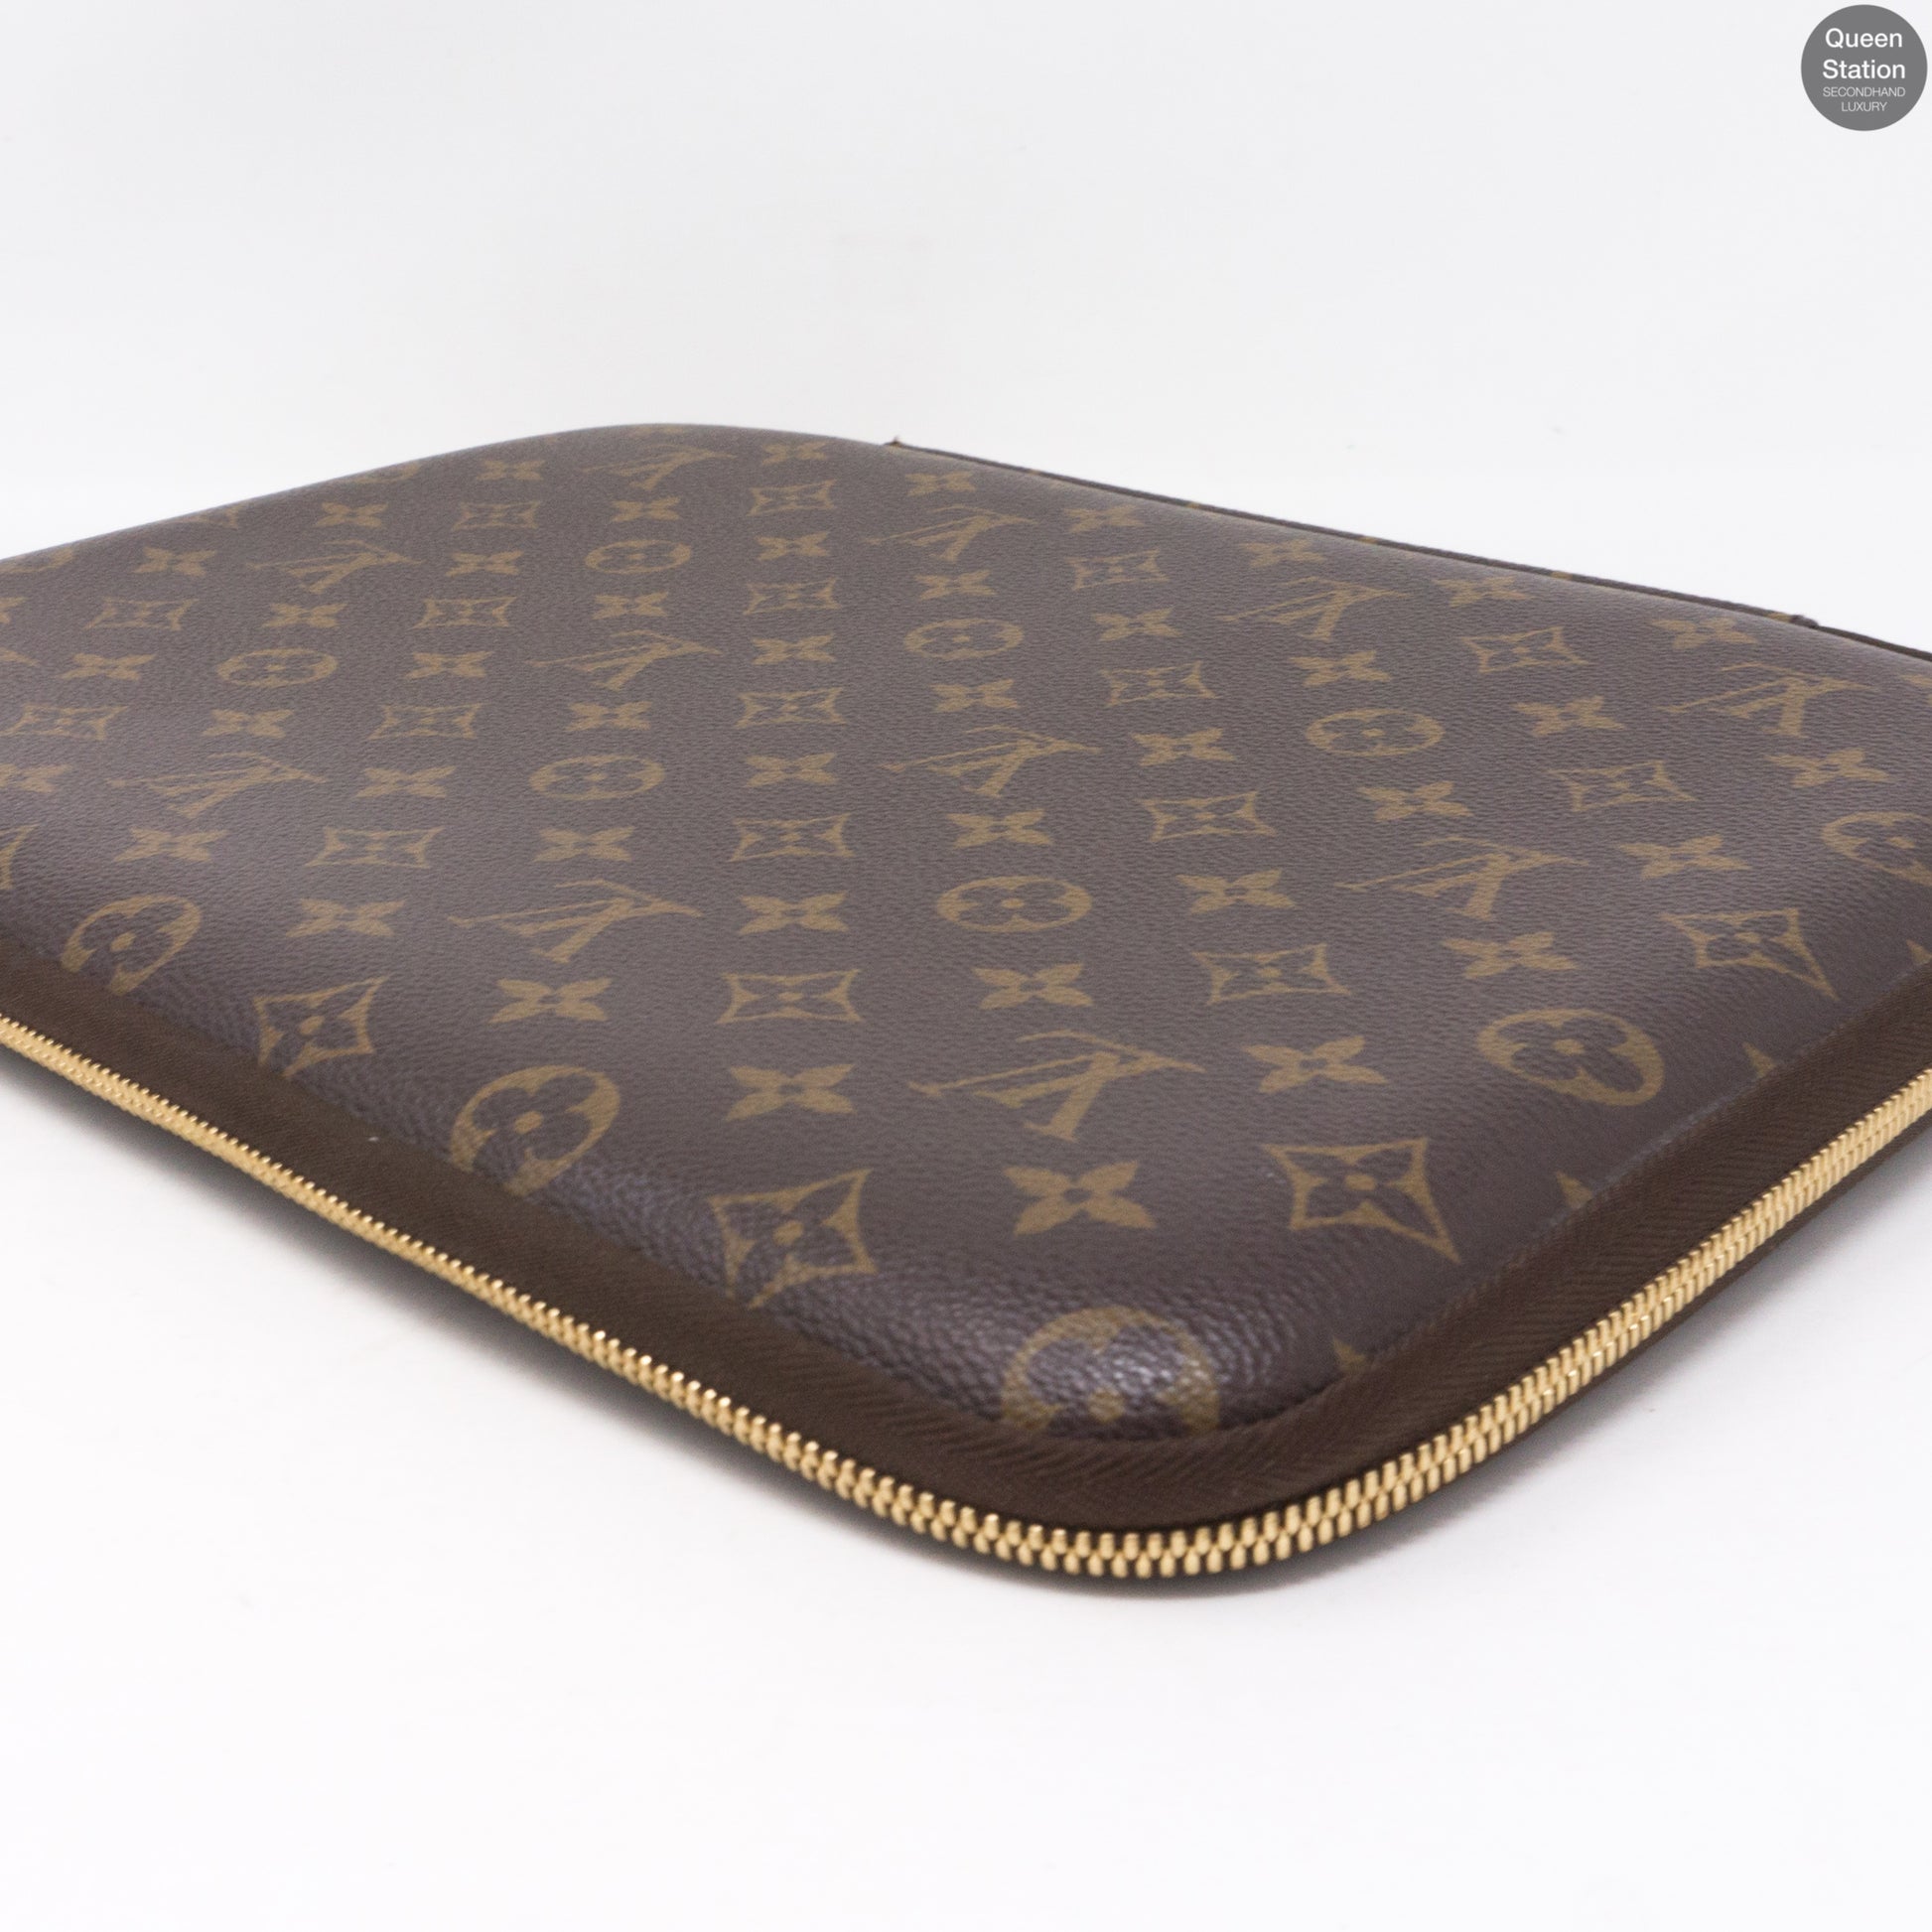 Louis Vuitton Monogram Canvas Laptop Sleeve 15 at the best price